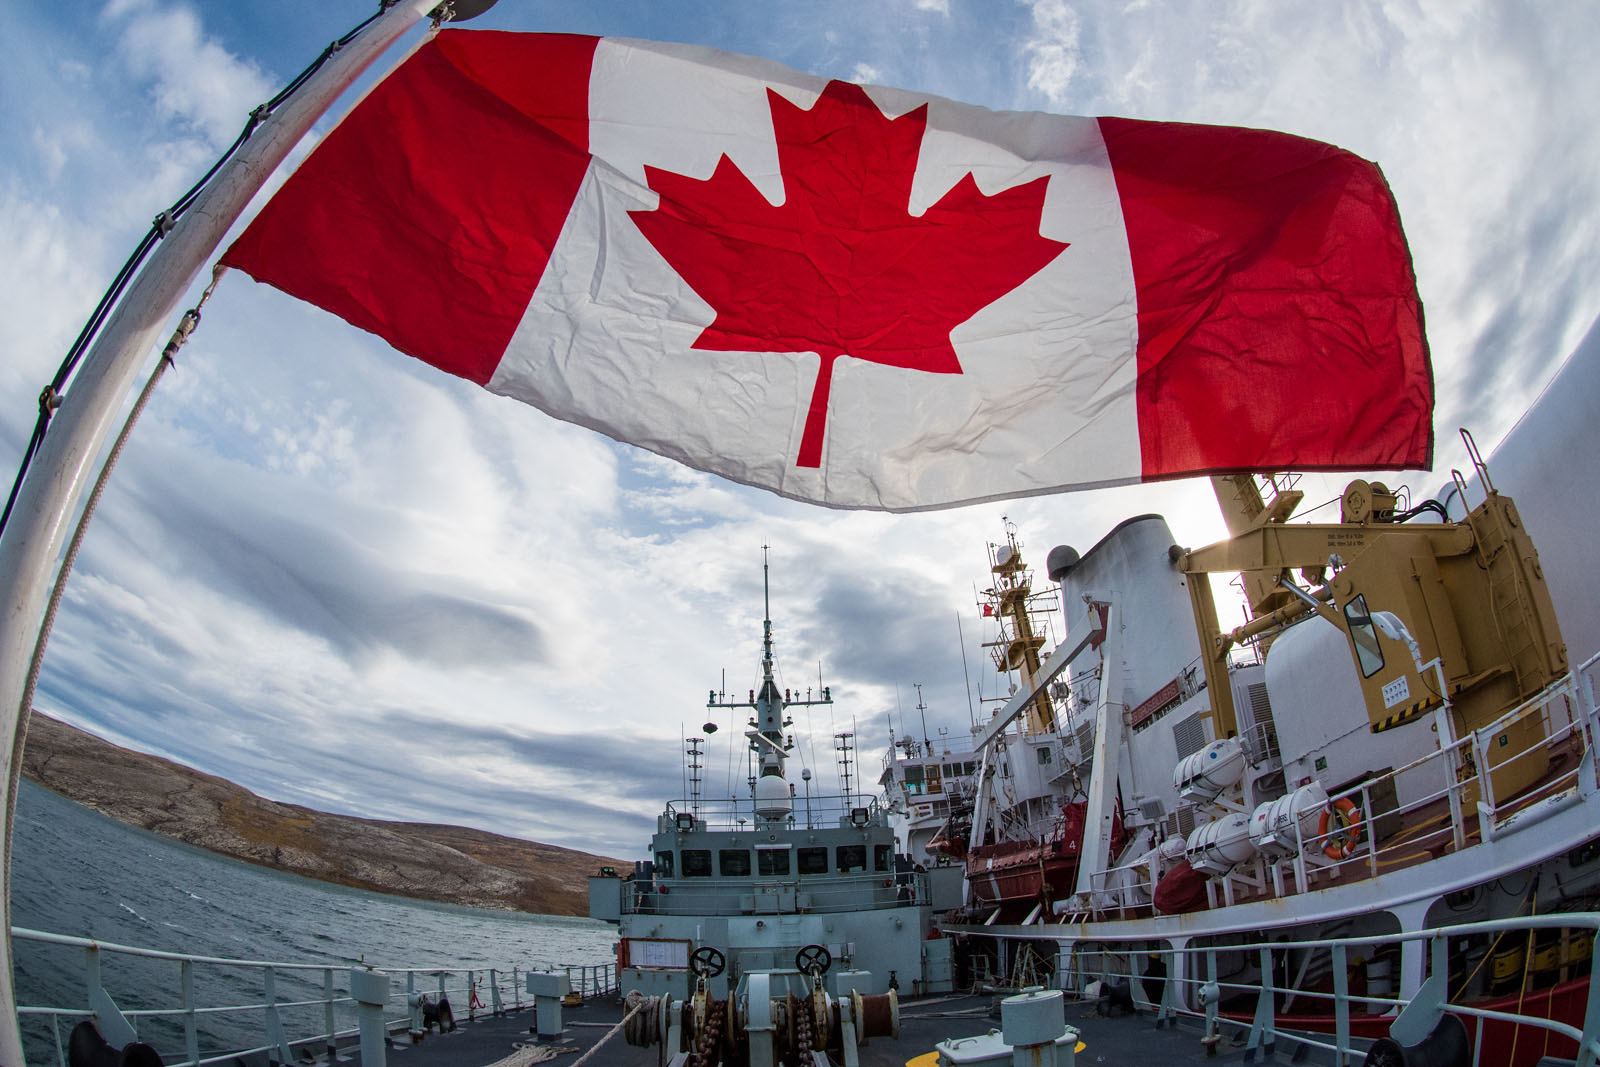 Naval Reserve Celebrates 100th Anniversary Across Canada